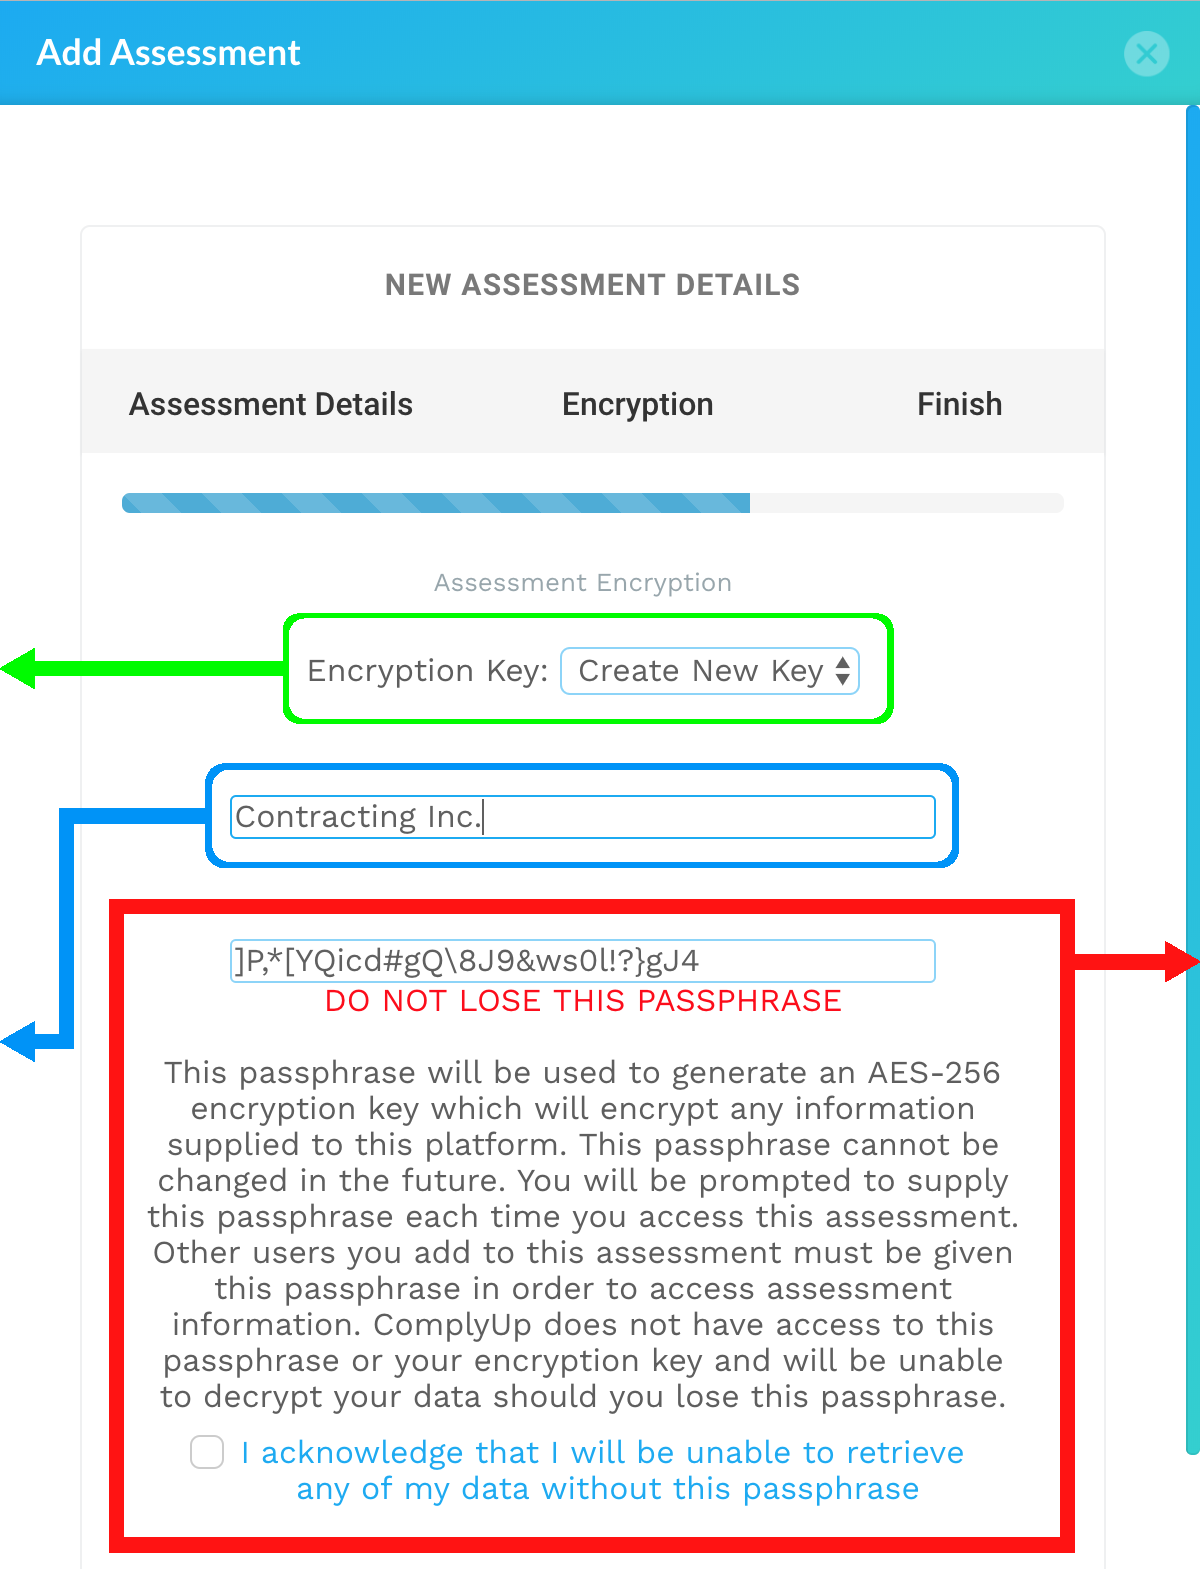 New Assessment Encryption Details